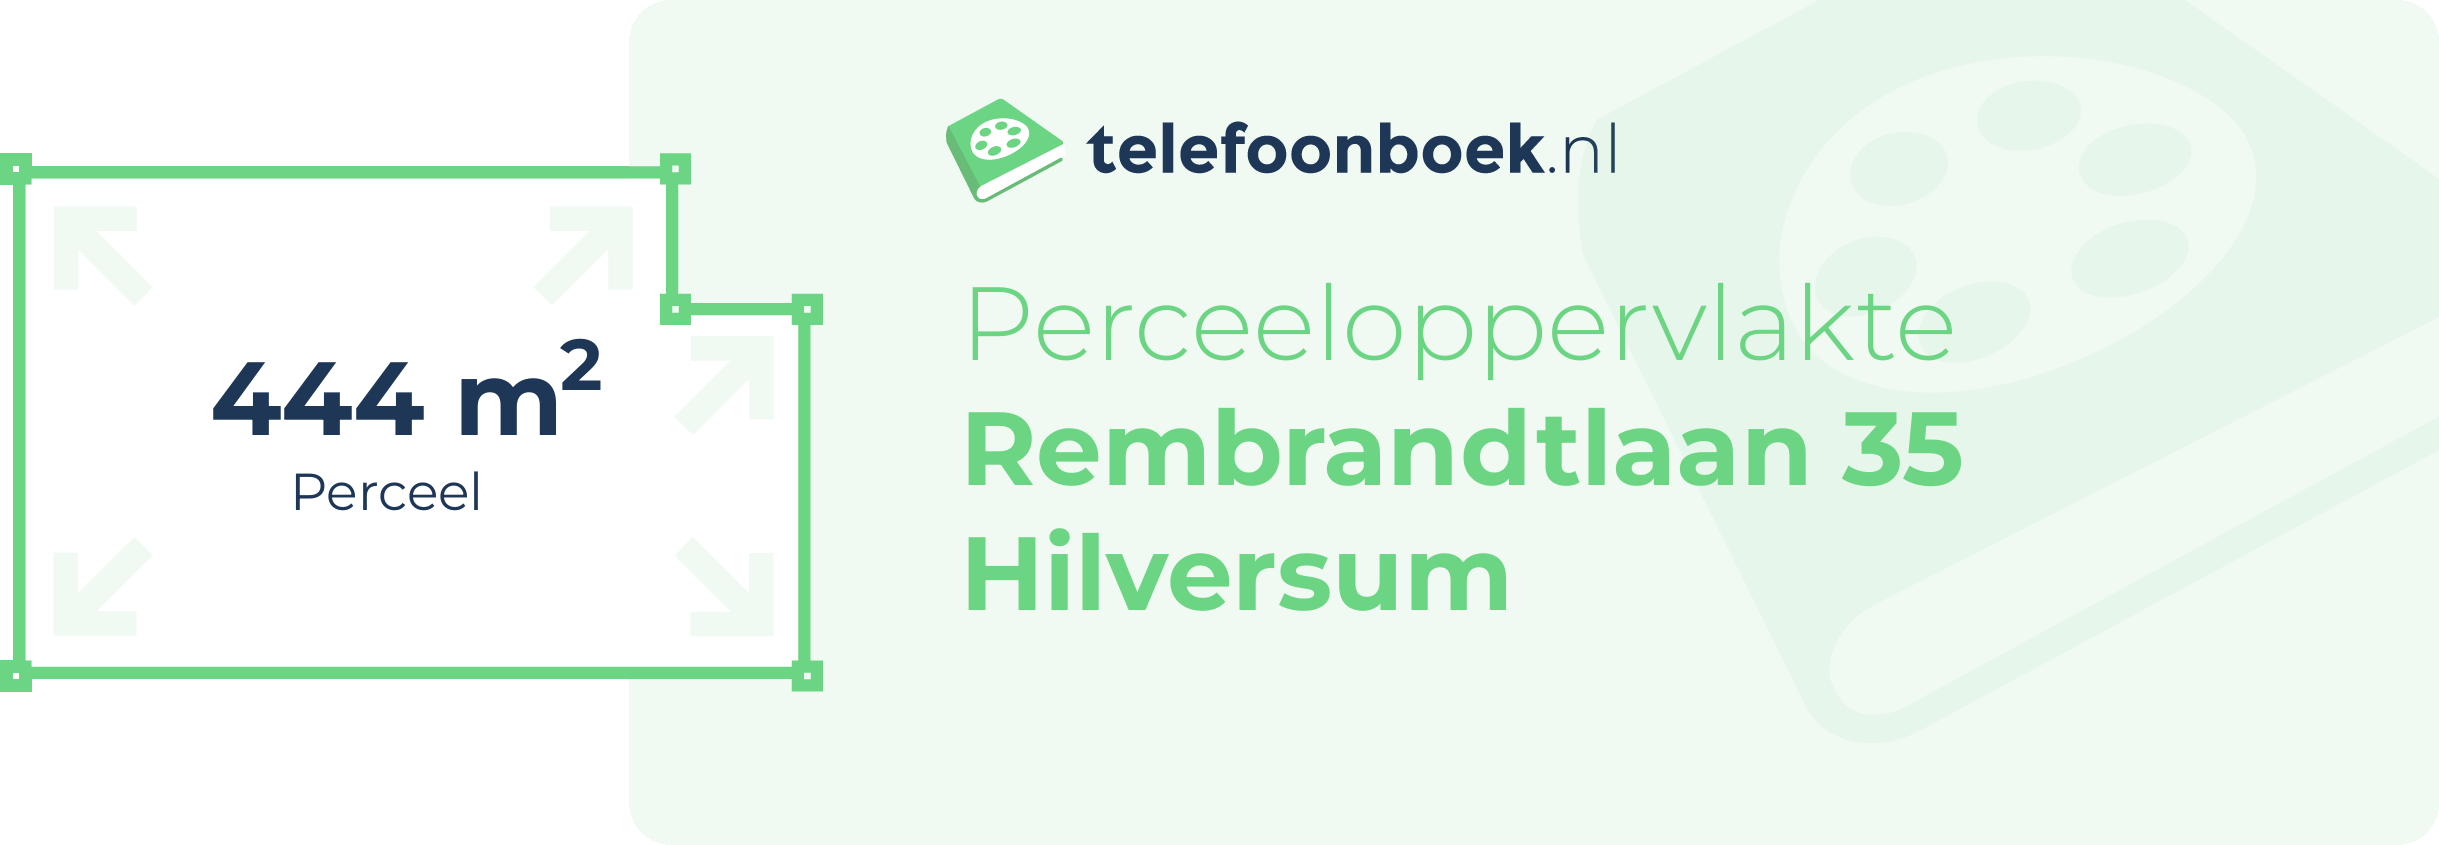 Perceeloppervlakte Rembrandtlaan 35 Hilversum